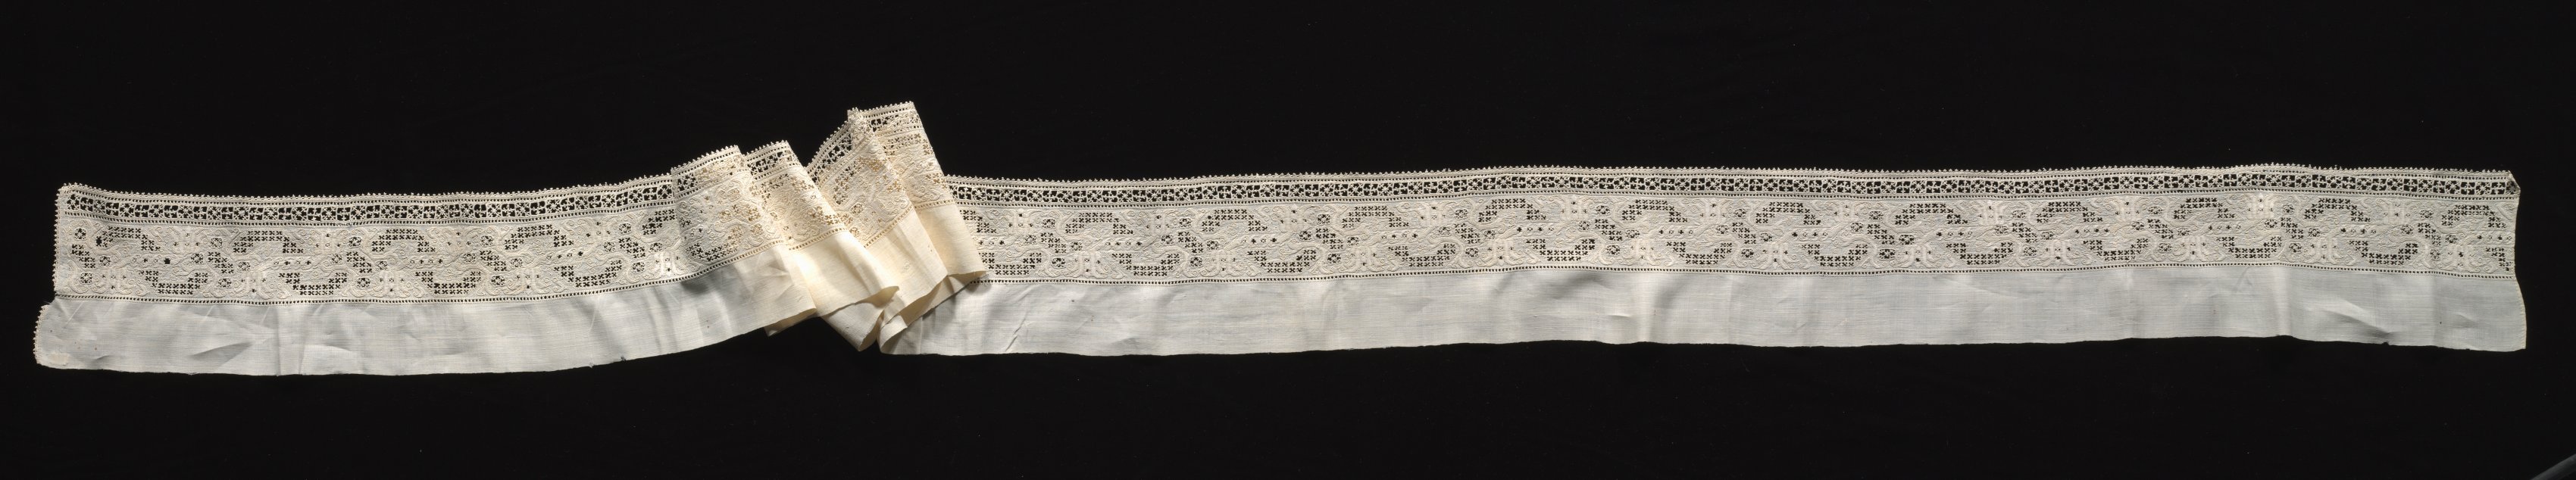 Needlepoint (Cutwork) Lace Band